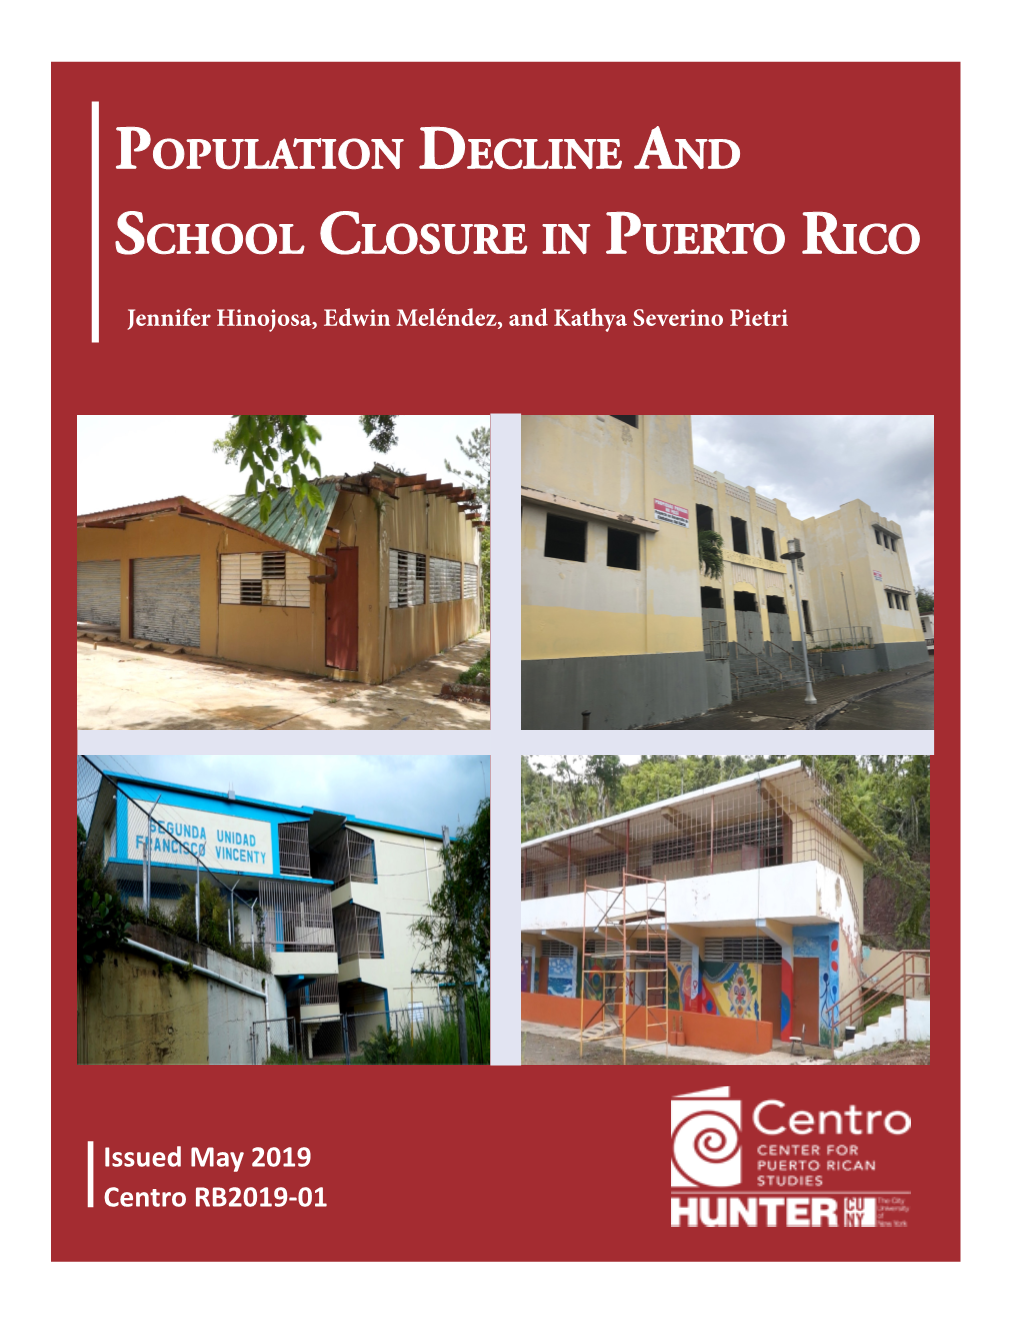 Population Decline and School Closure in Puerto Rico